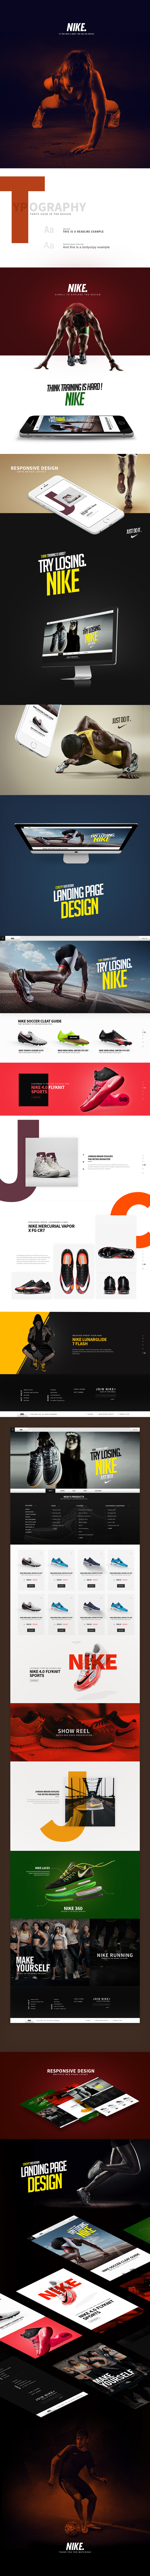 Nike just do it UI ux Website Design shoes sports Responsive Design dark